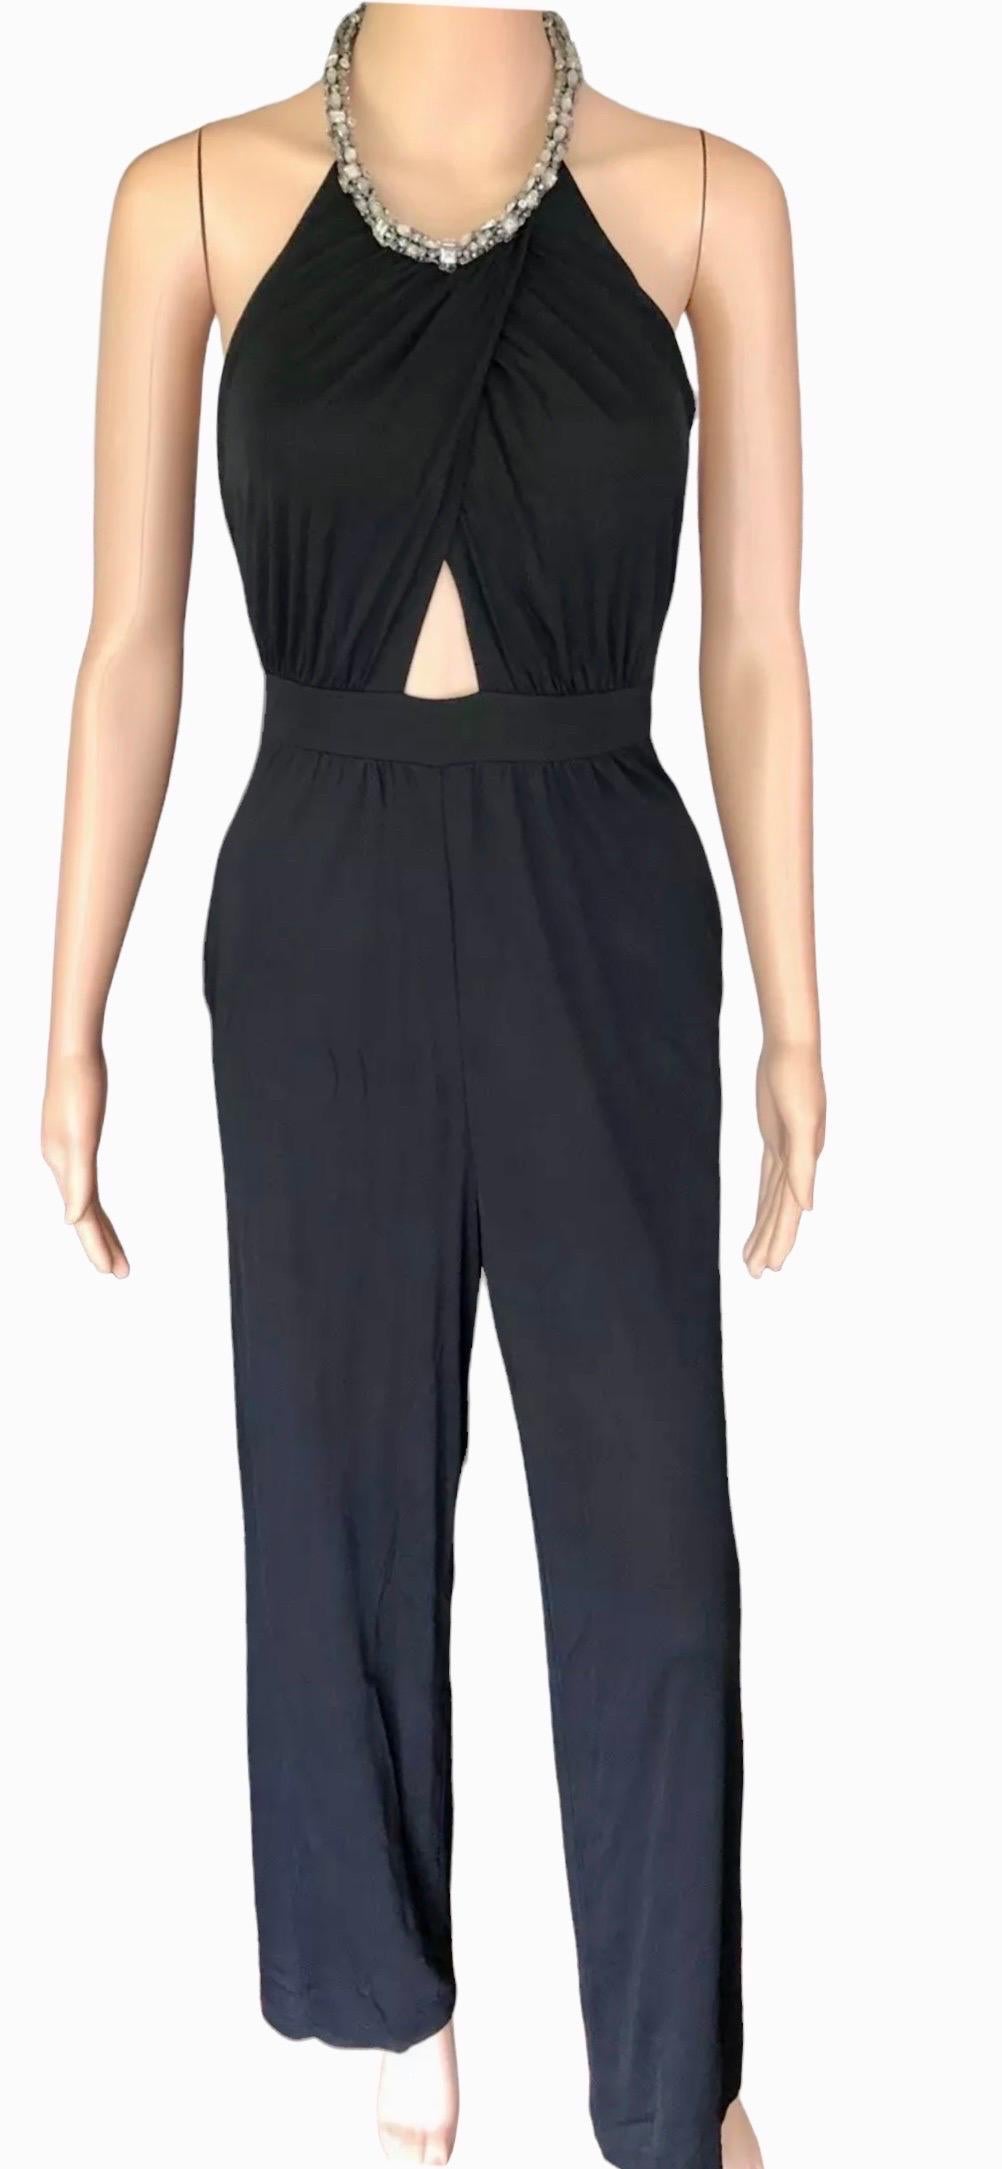 Roberto Cavalli c.2014 Embellished Halter Neck Open Back Black Jumpsuit In Good Condition For Sale In Naples, FL